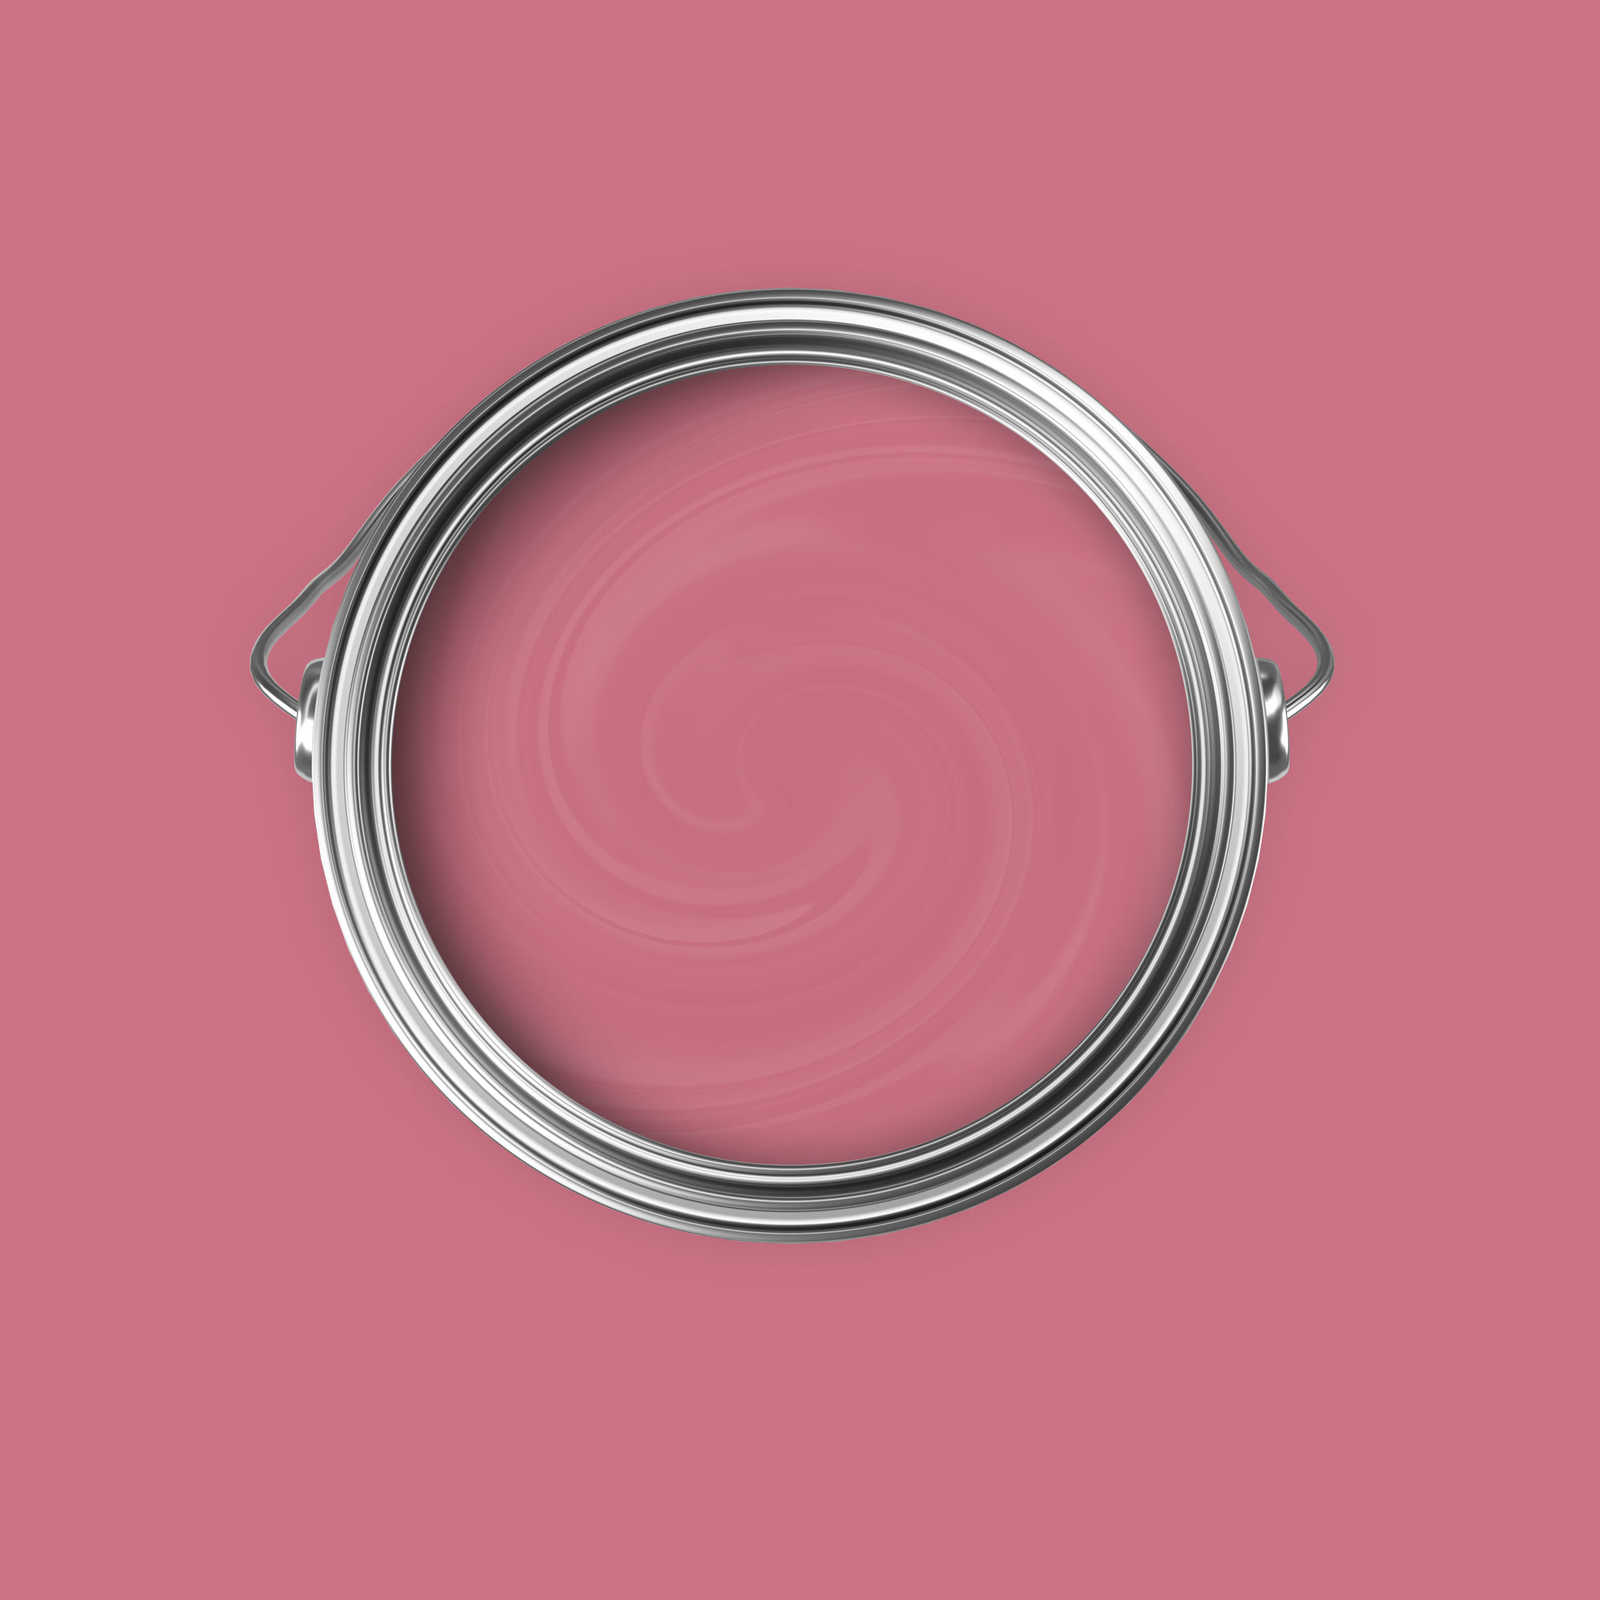             Pittura murale Premium Rosa scuro rinfrescante »Blooming Blossom« NW1018 – 5 litri
        